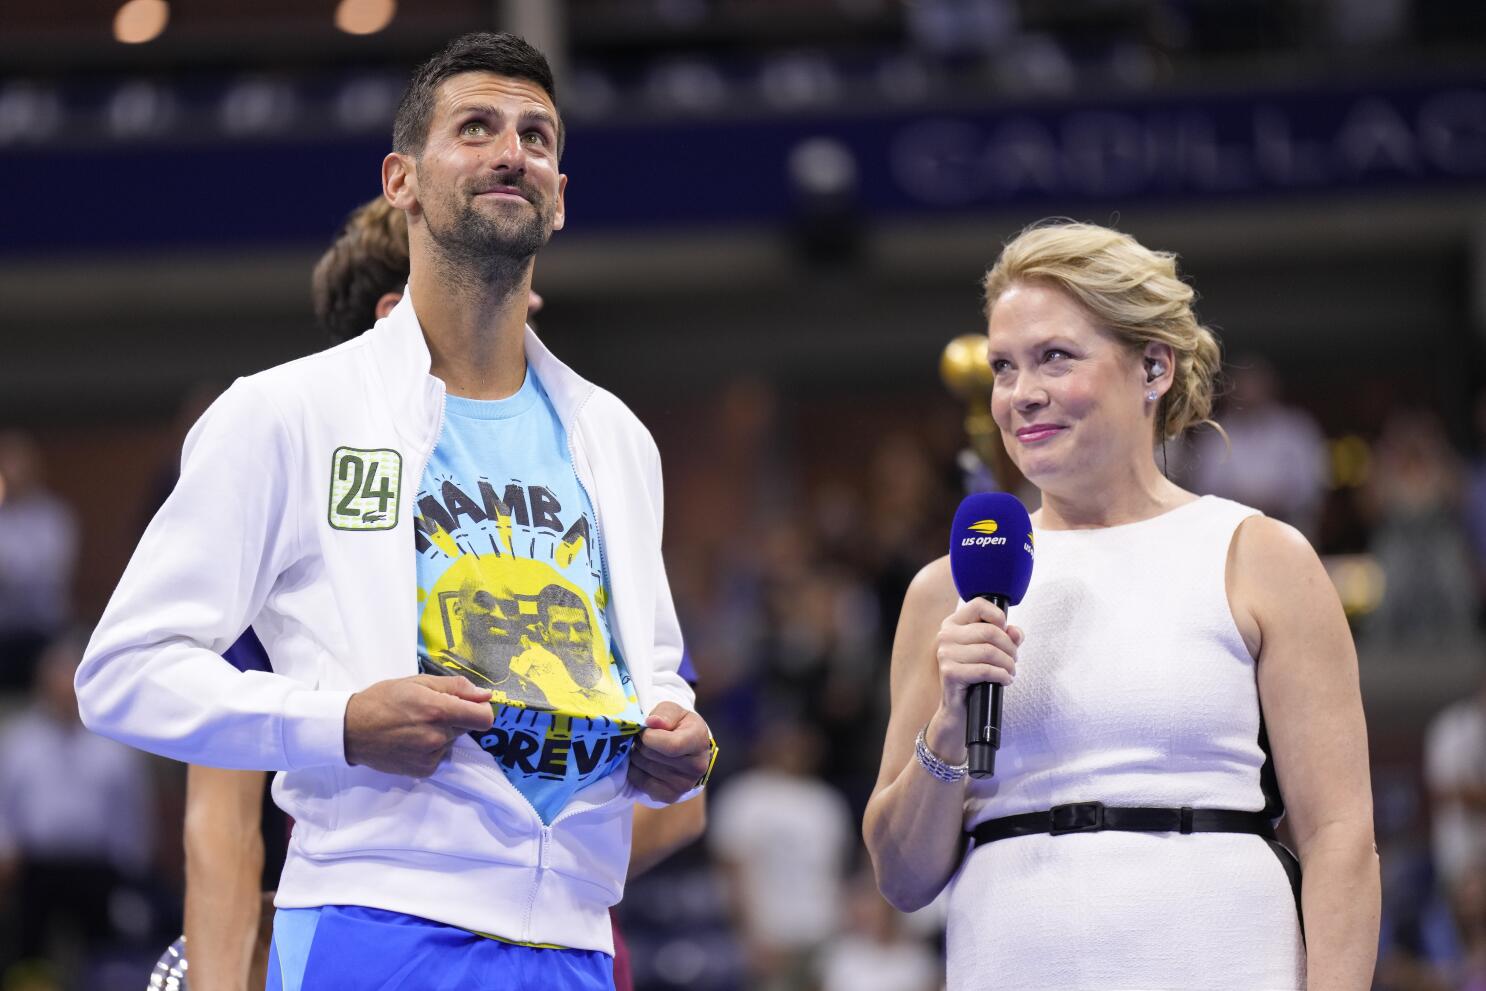 Novak Djokovic wins 24th Grand Slam title at US Open, beats Daniil Medvedev